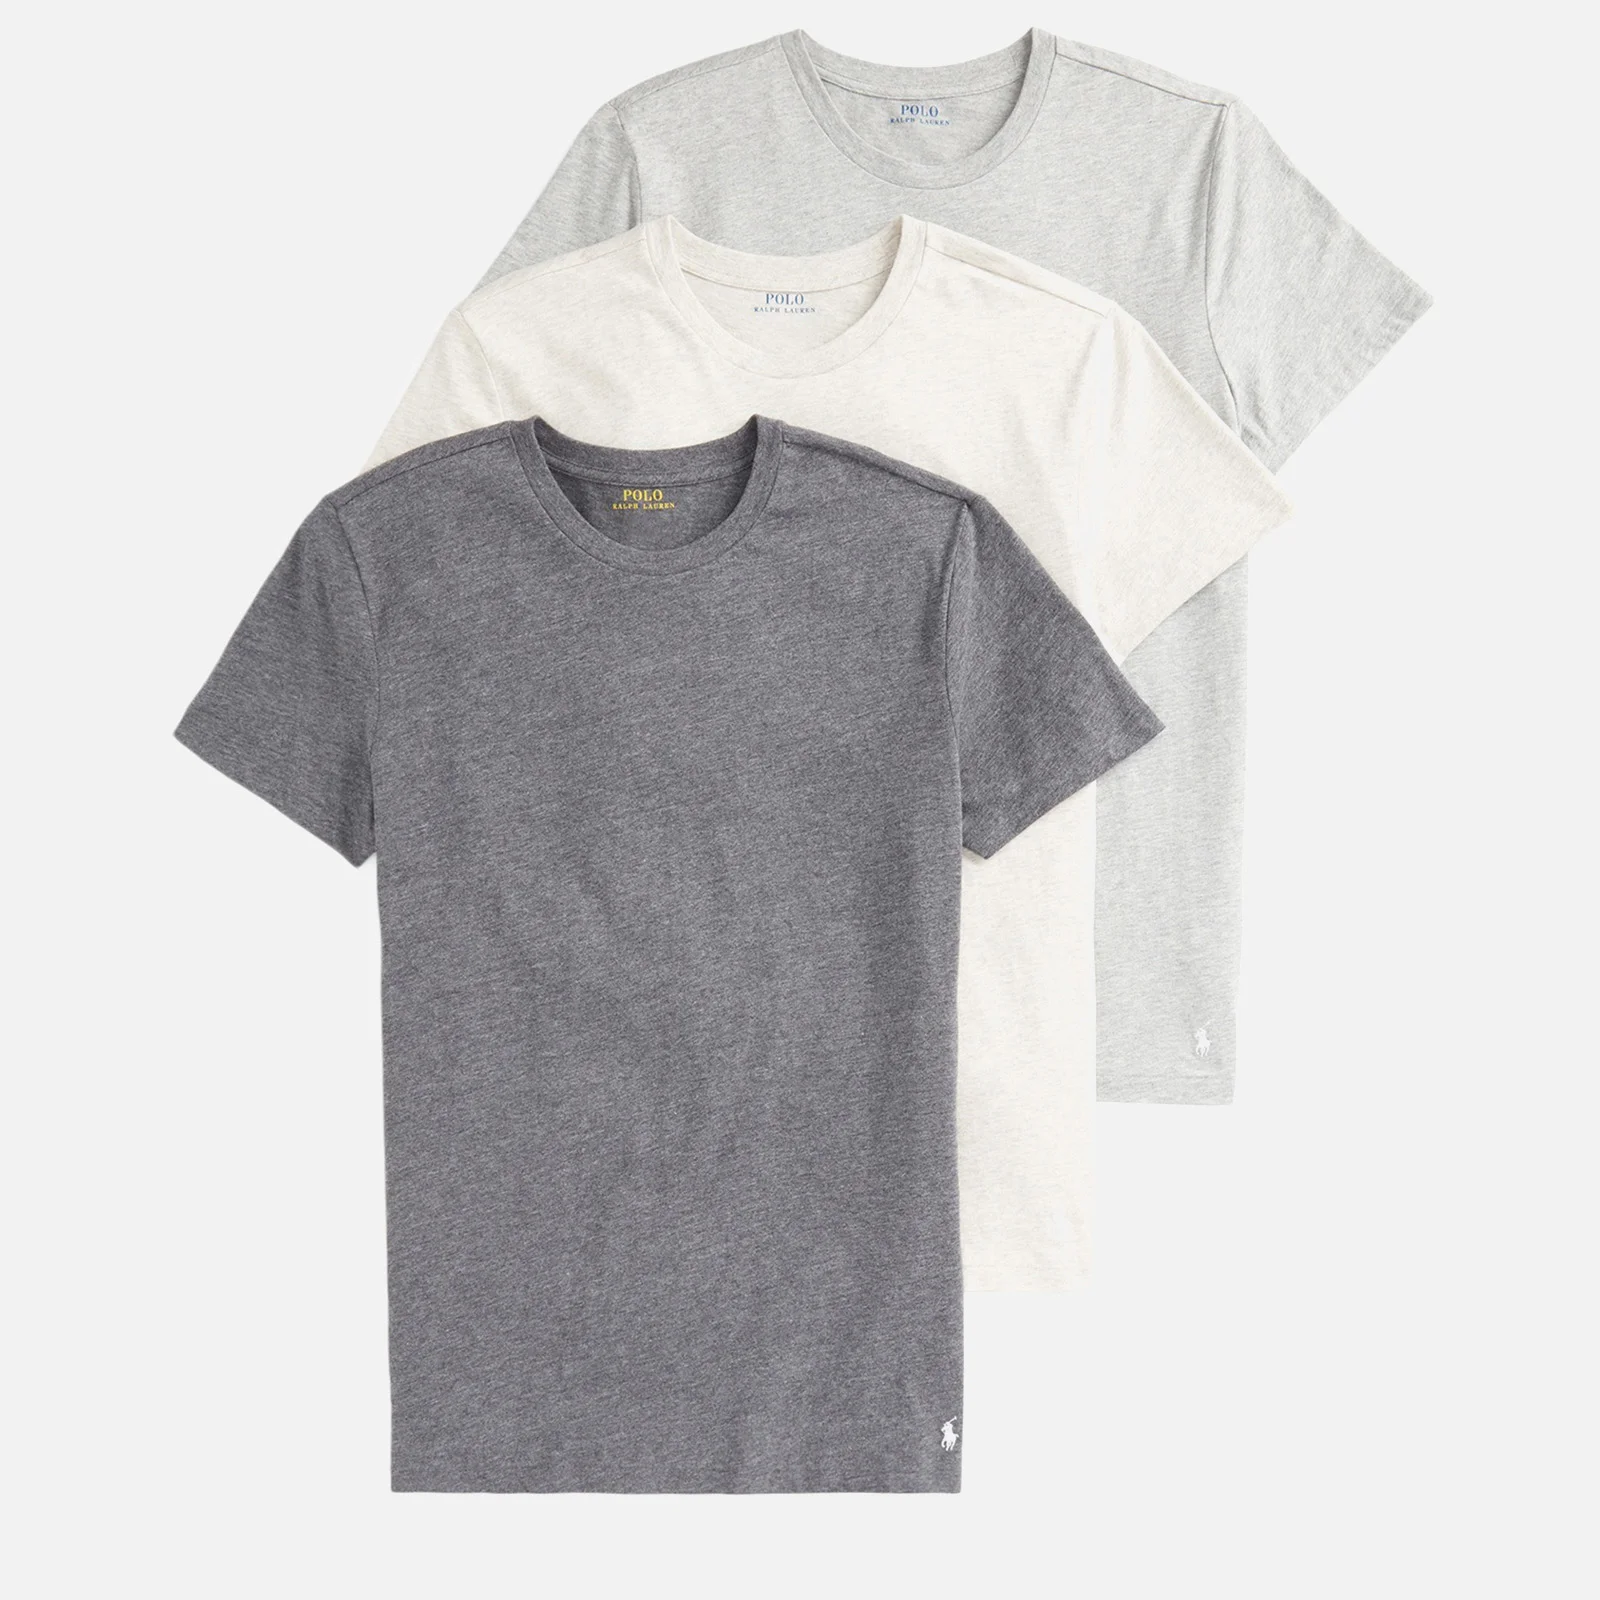 Polo Ralph Lauren Men's 3 Pack Crewneck T-Shirts - Andover Heather/Lt Sp Grey/Charcoal Grey Image 1